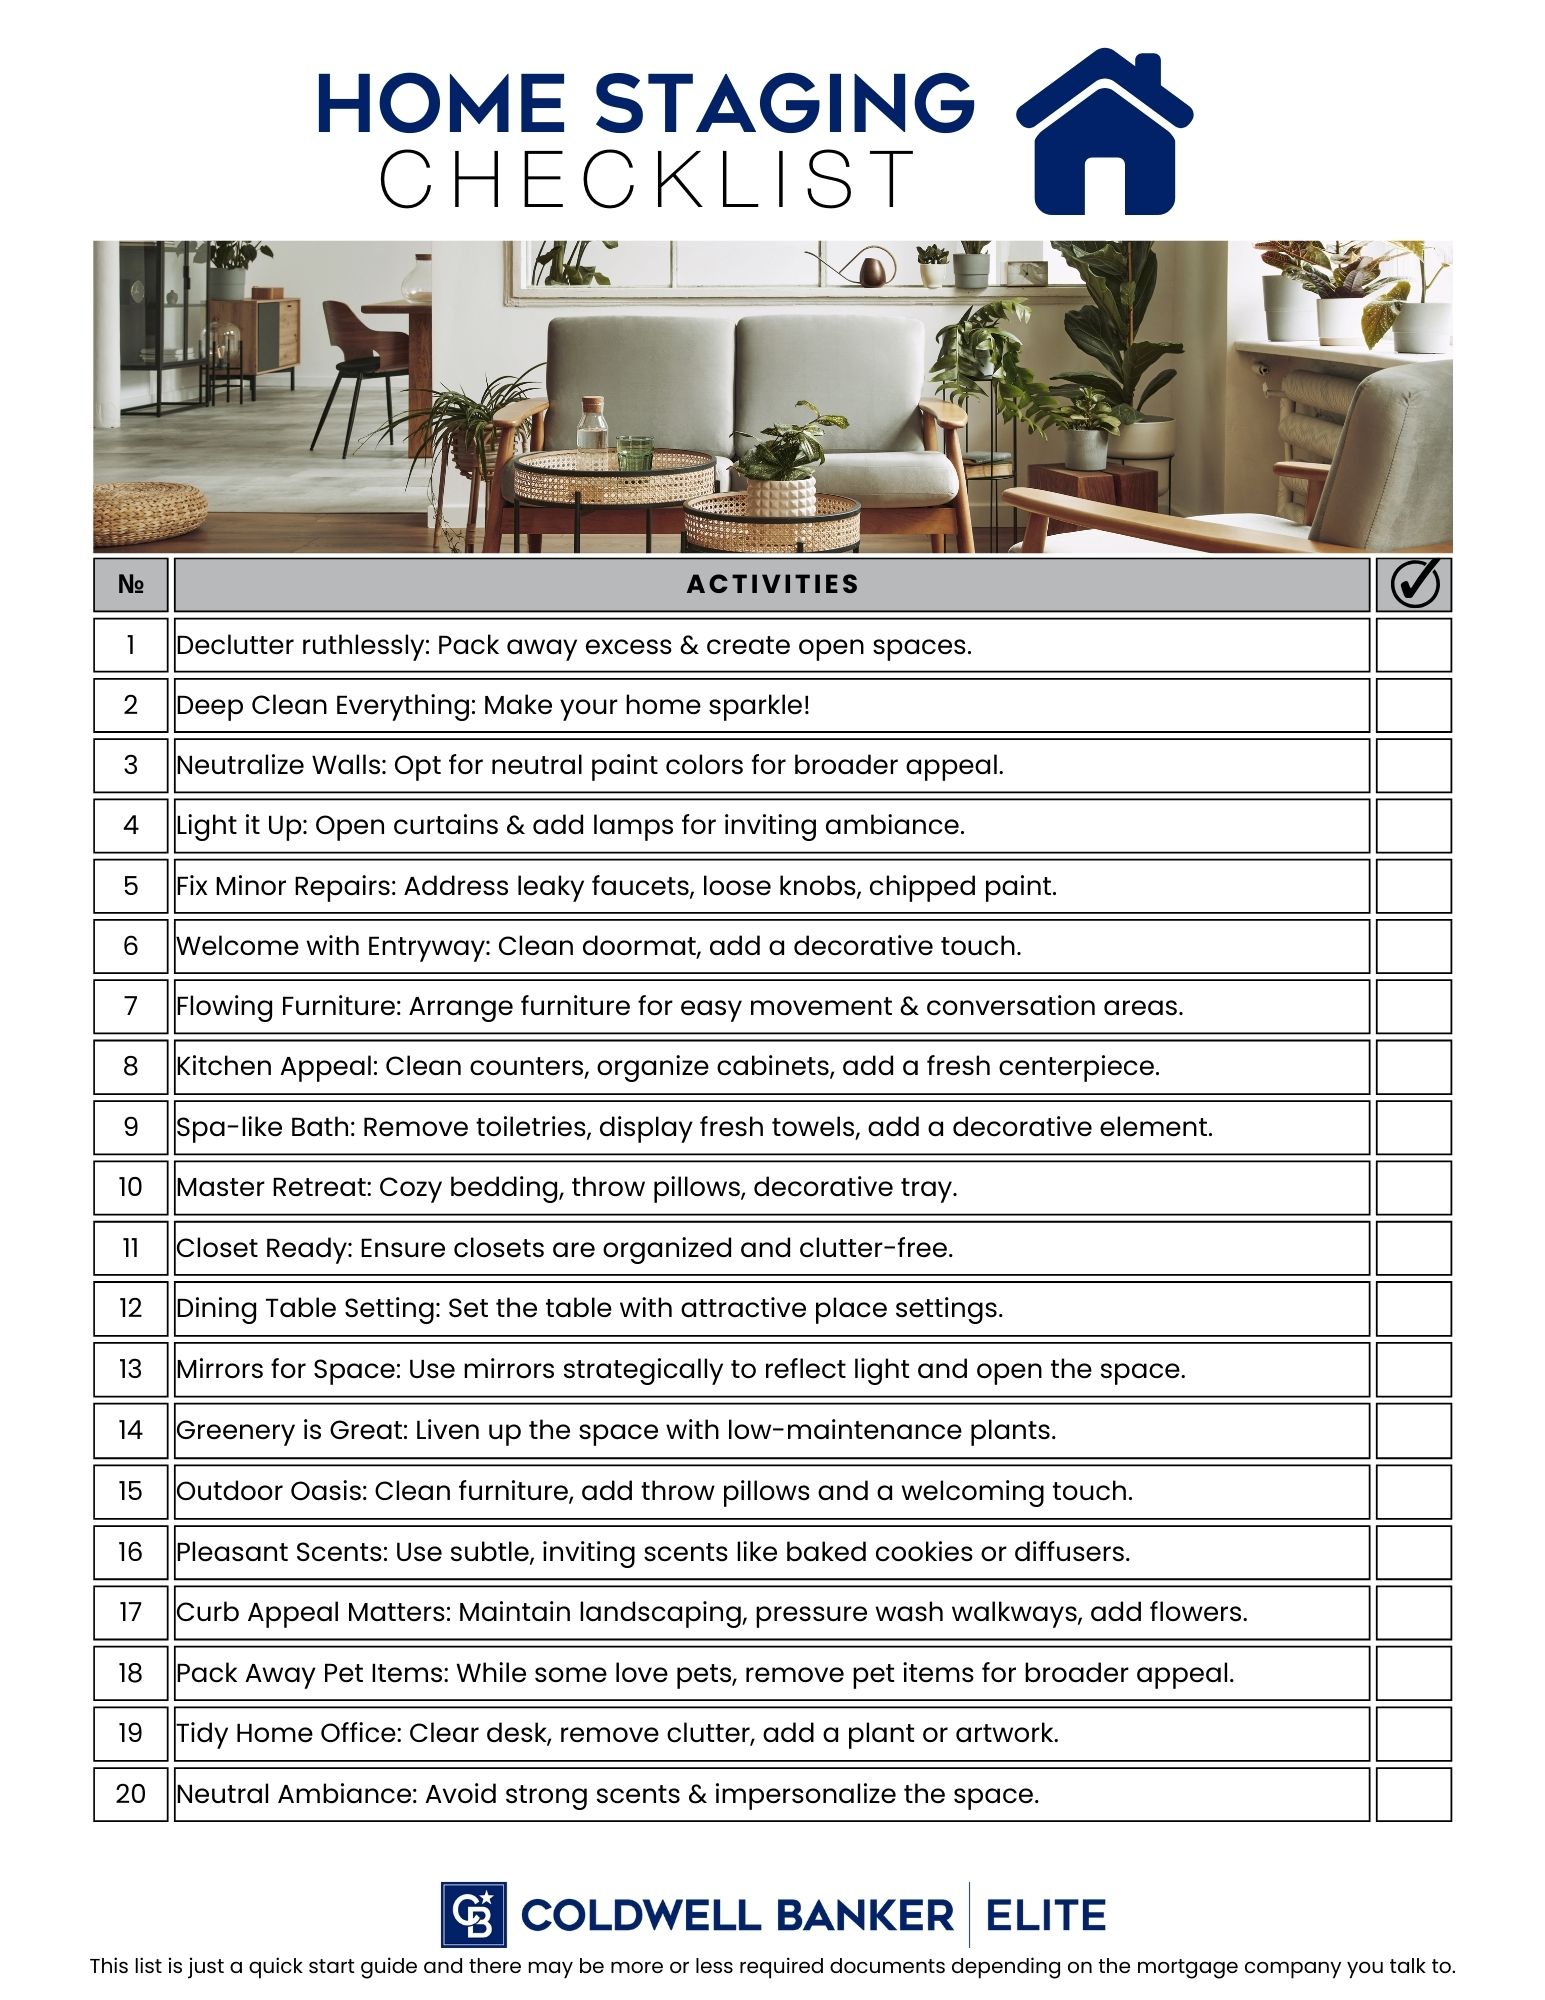 CBE home staging checklist